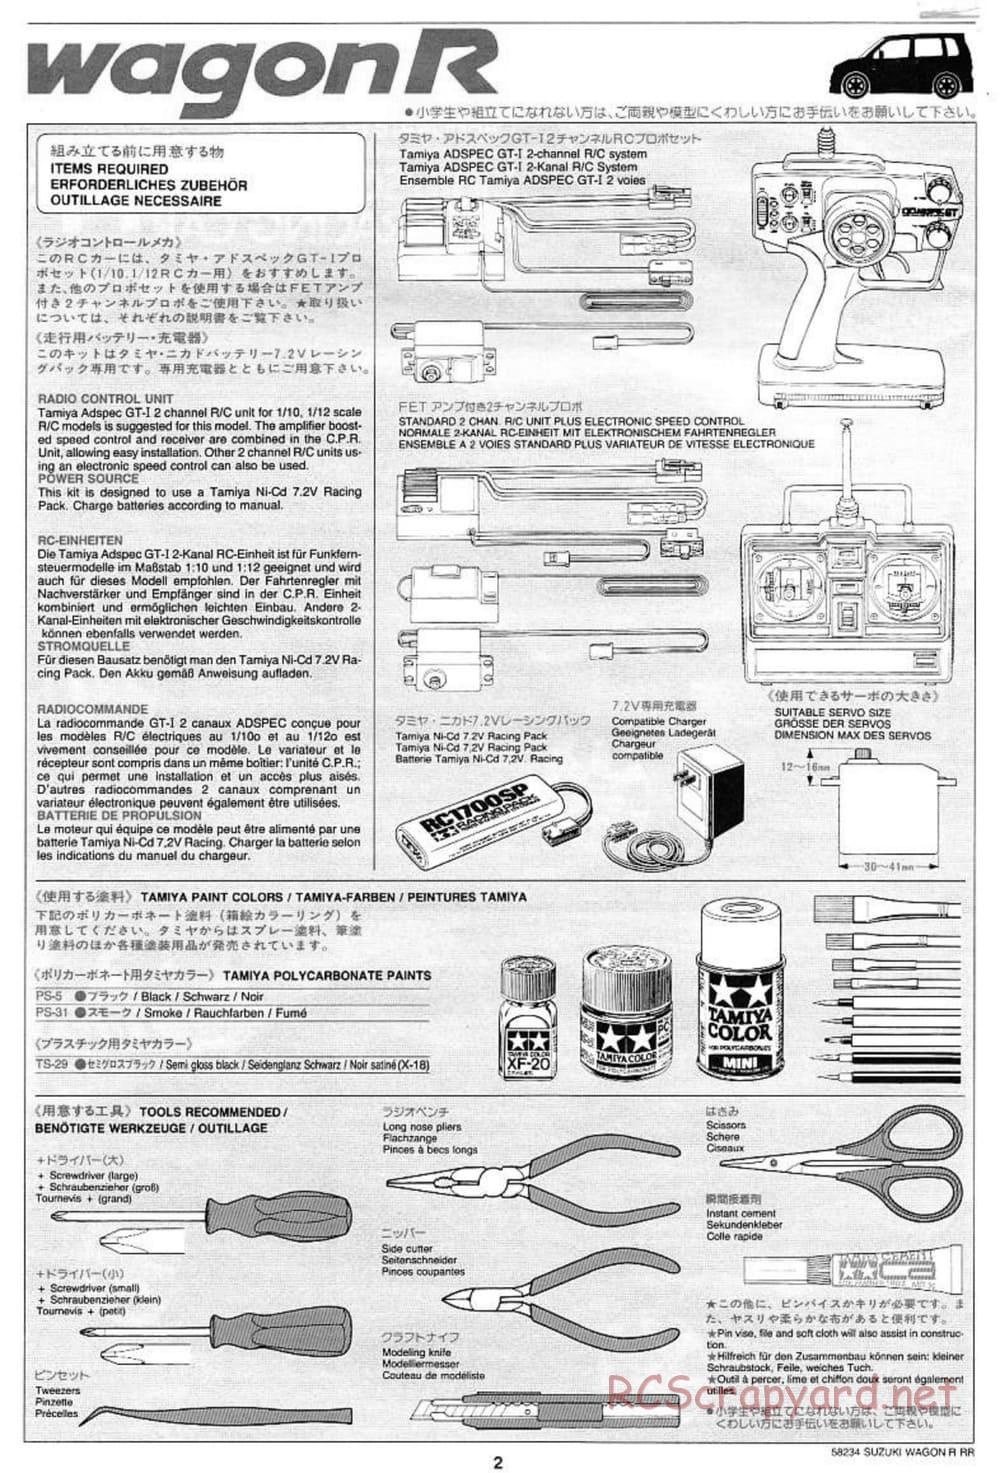 Tamiya - Suzuki WagonR-RR - M03 Chassis - Manual - Page 2